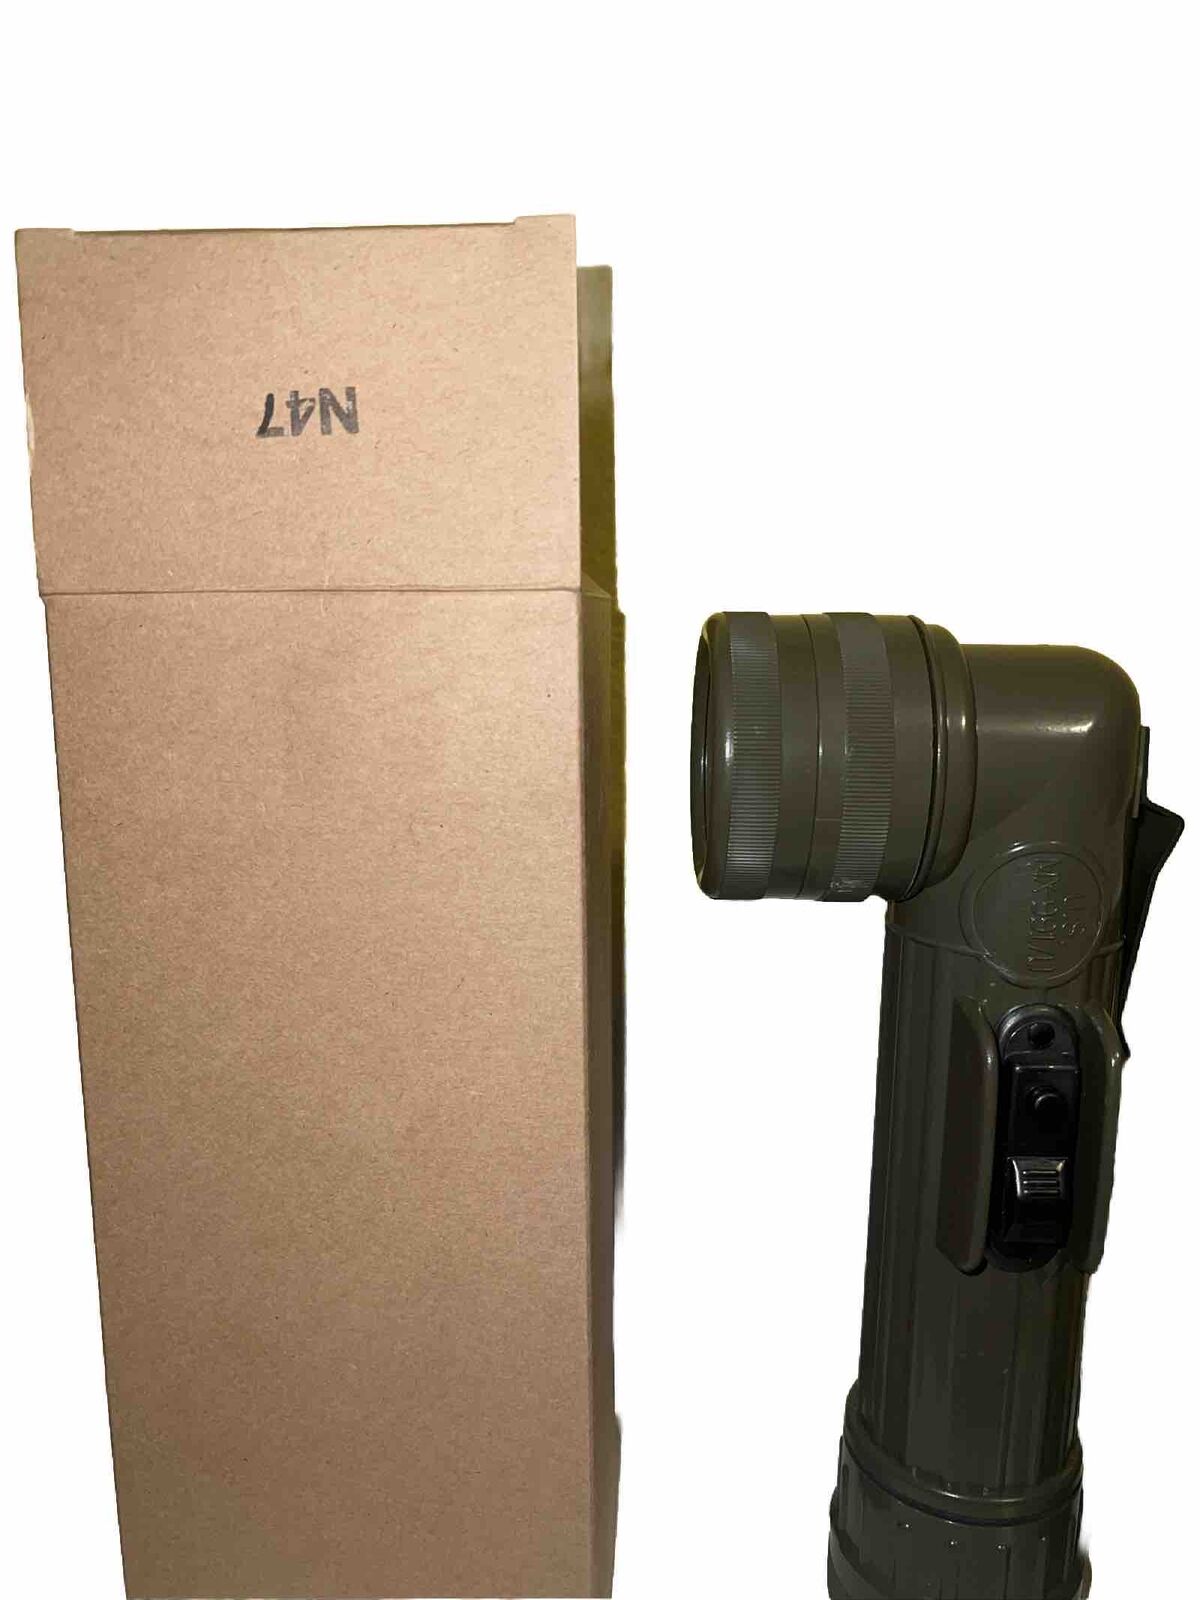 US Military Angle Head Flashlight MX-991/U : NEW IN BOX